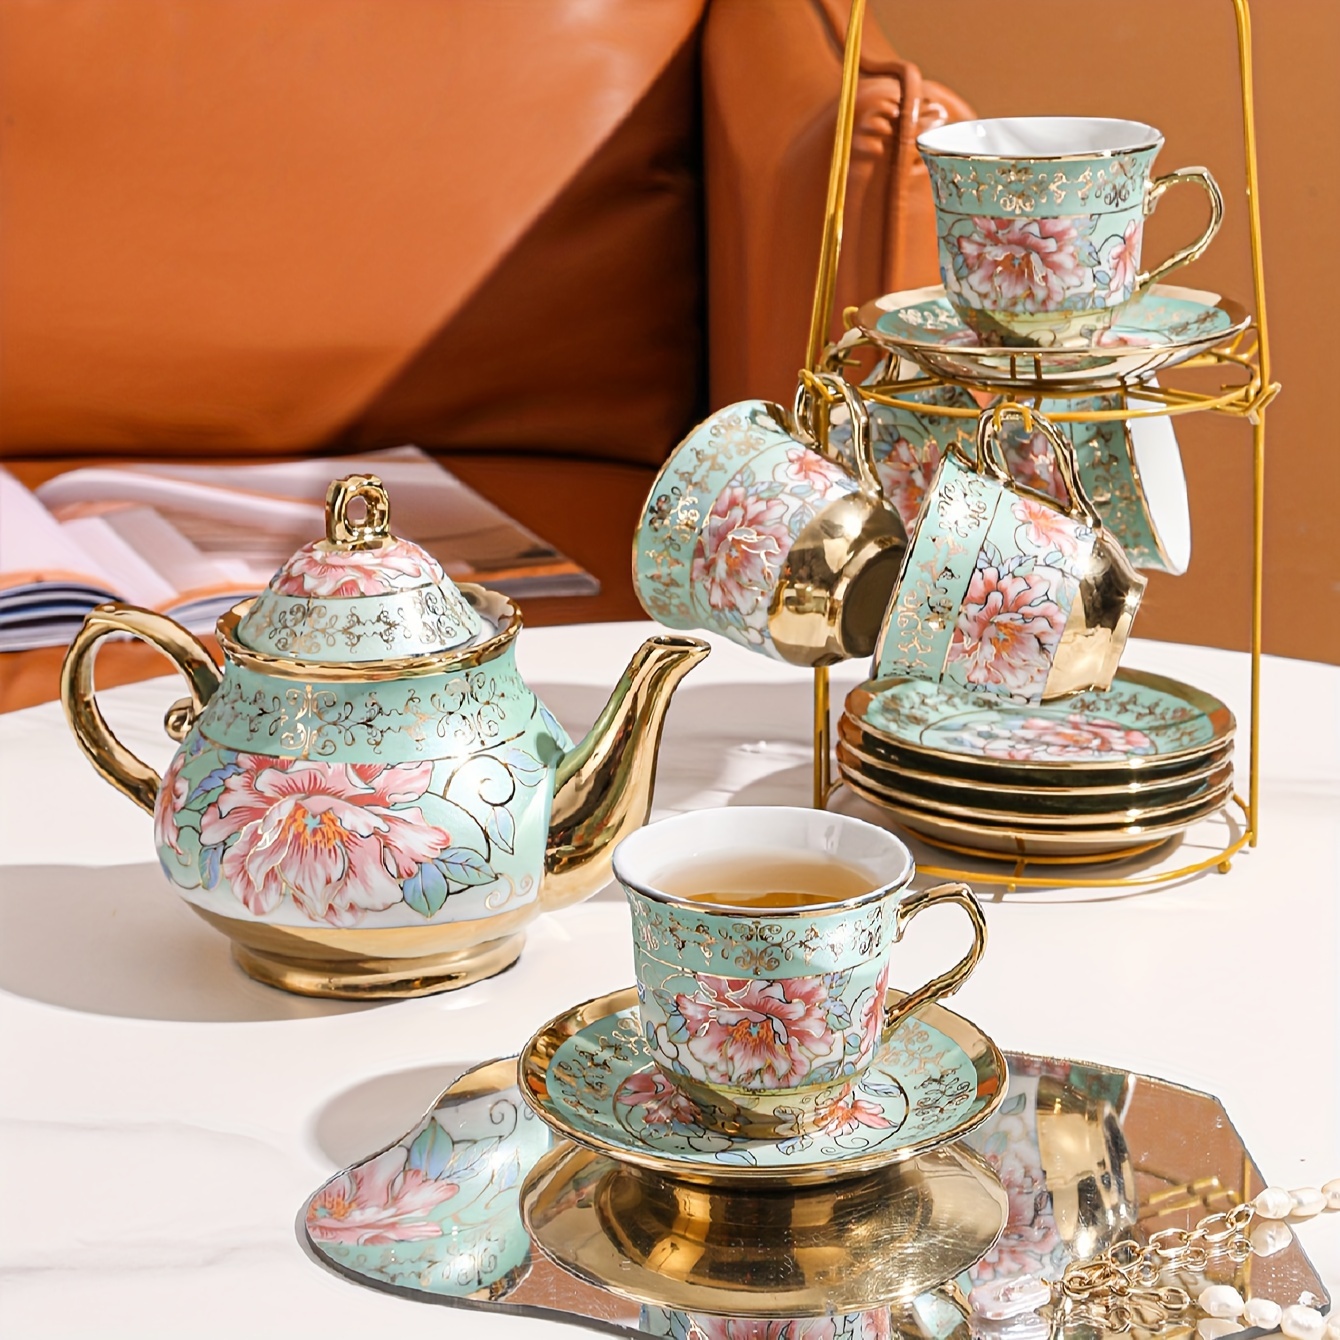 Tea Set, Ceramics Tea Set, Afternoon Tea Set, 6 Cups, 6 Plates, 1